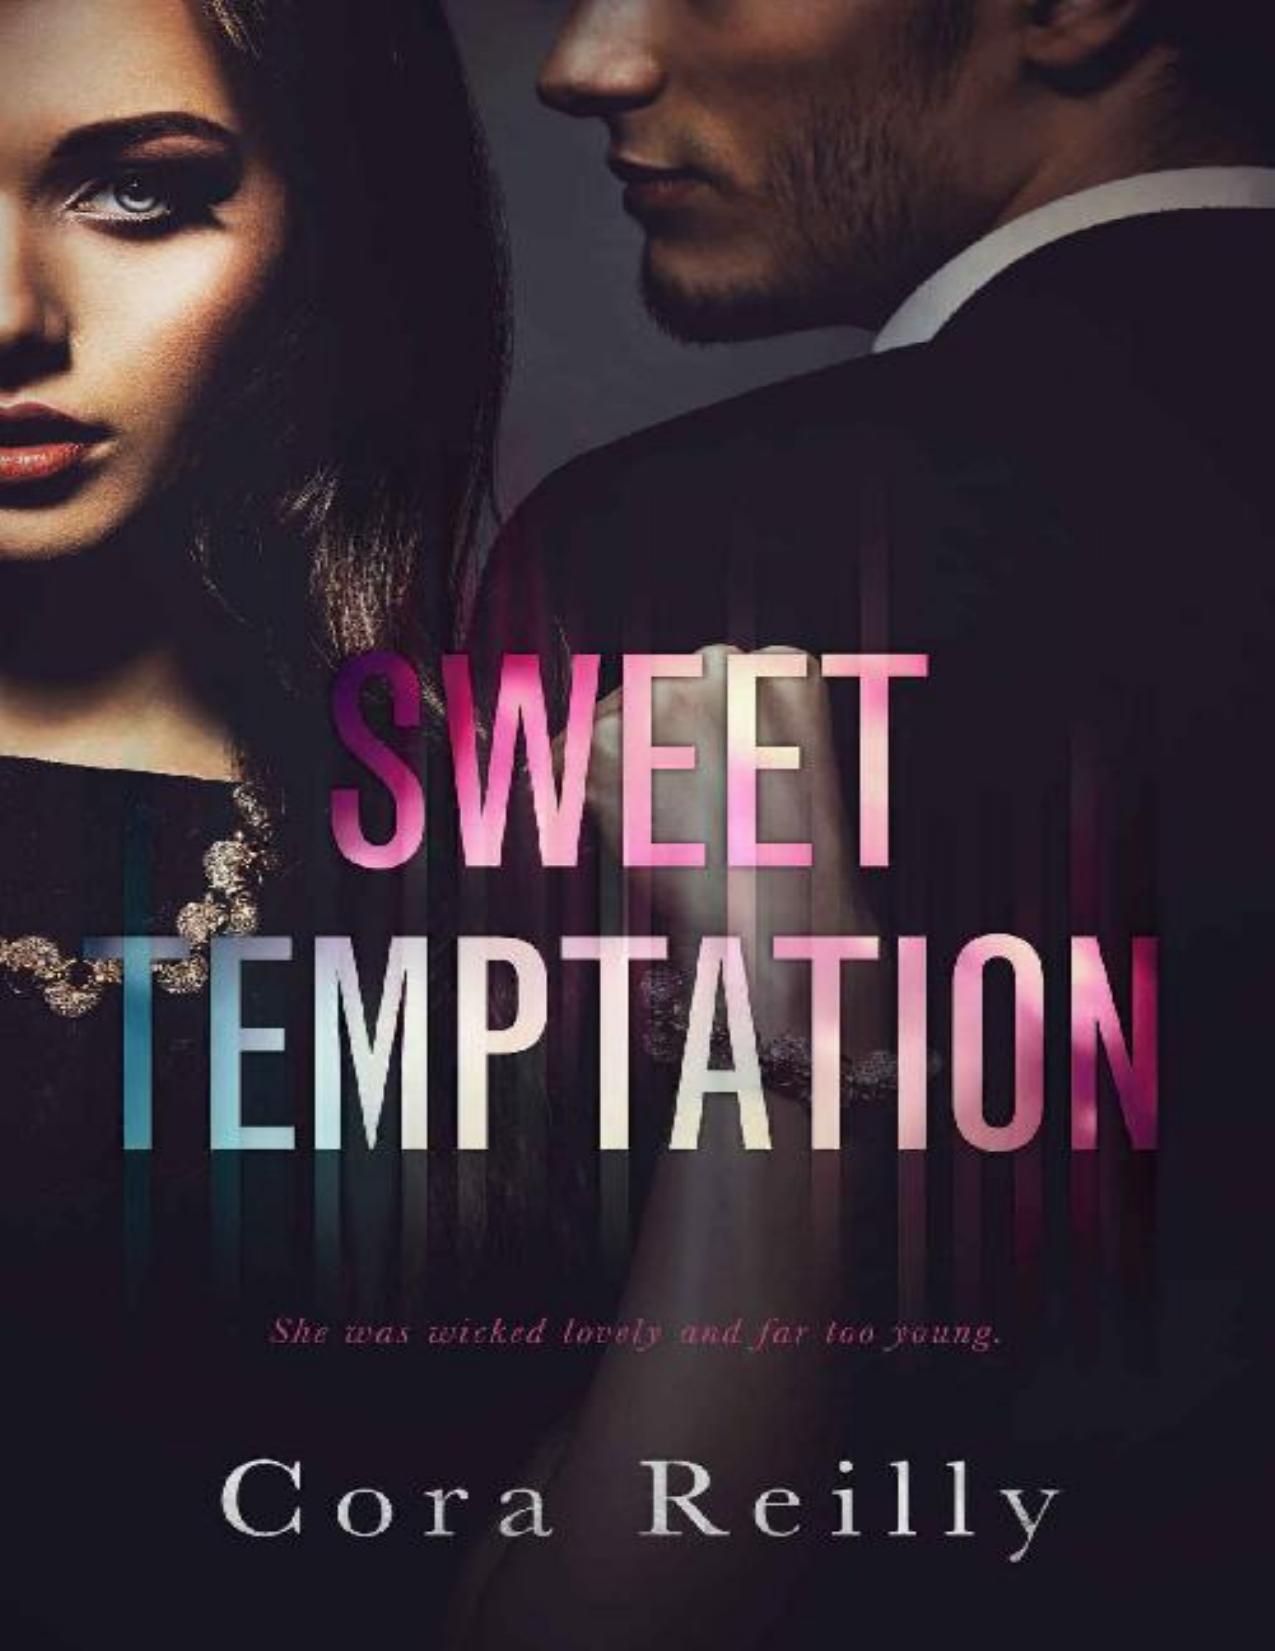 Sweet Temptation by Cora Reilly PDF, EPUB Free Download